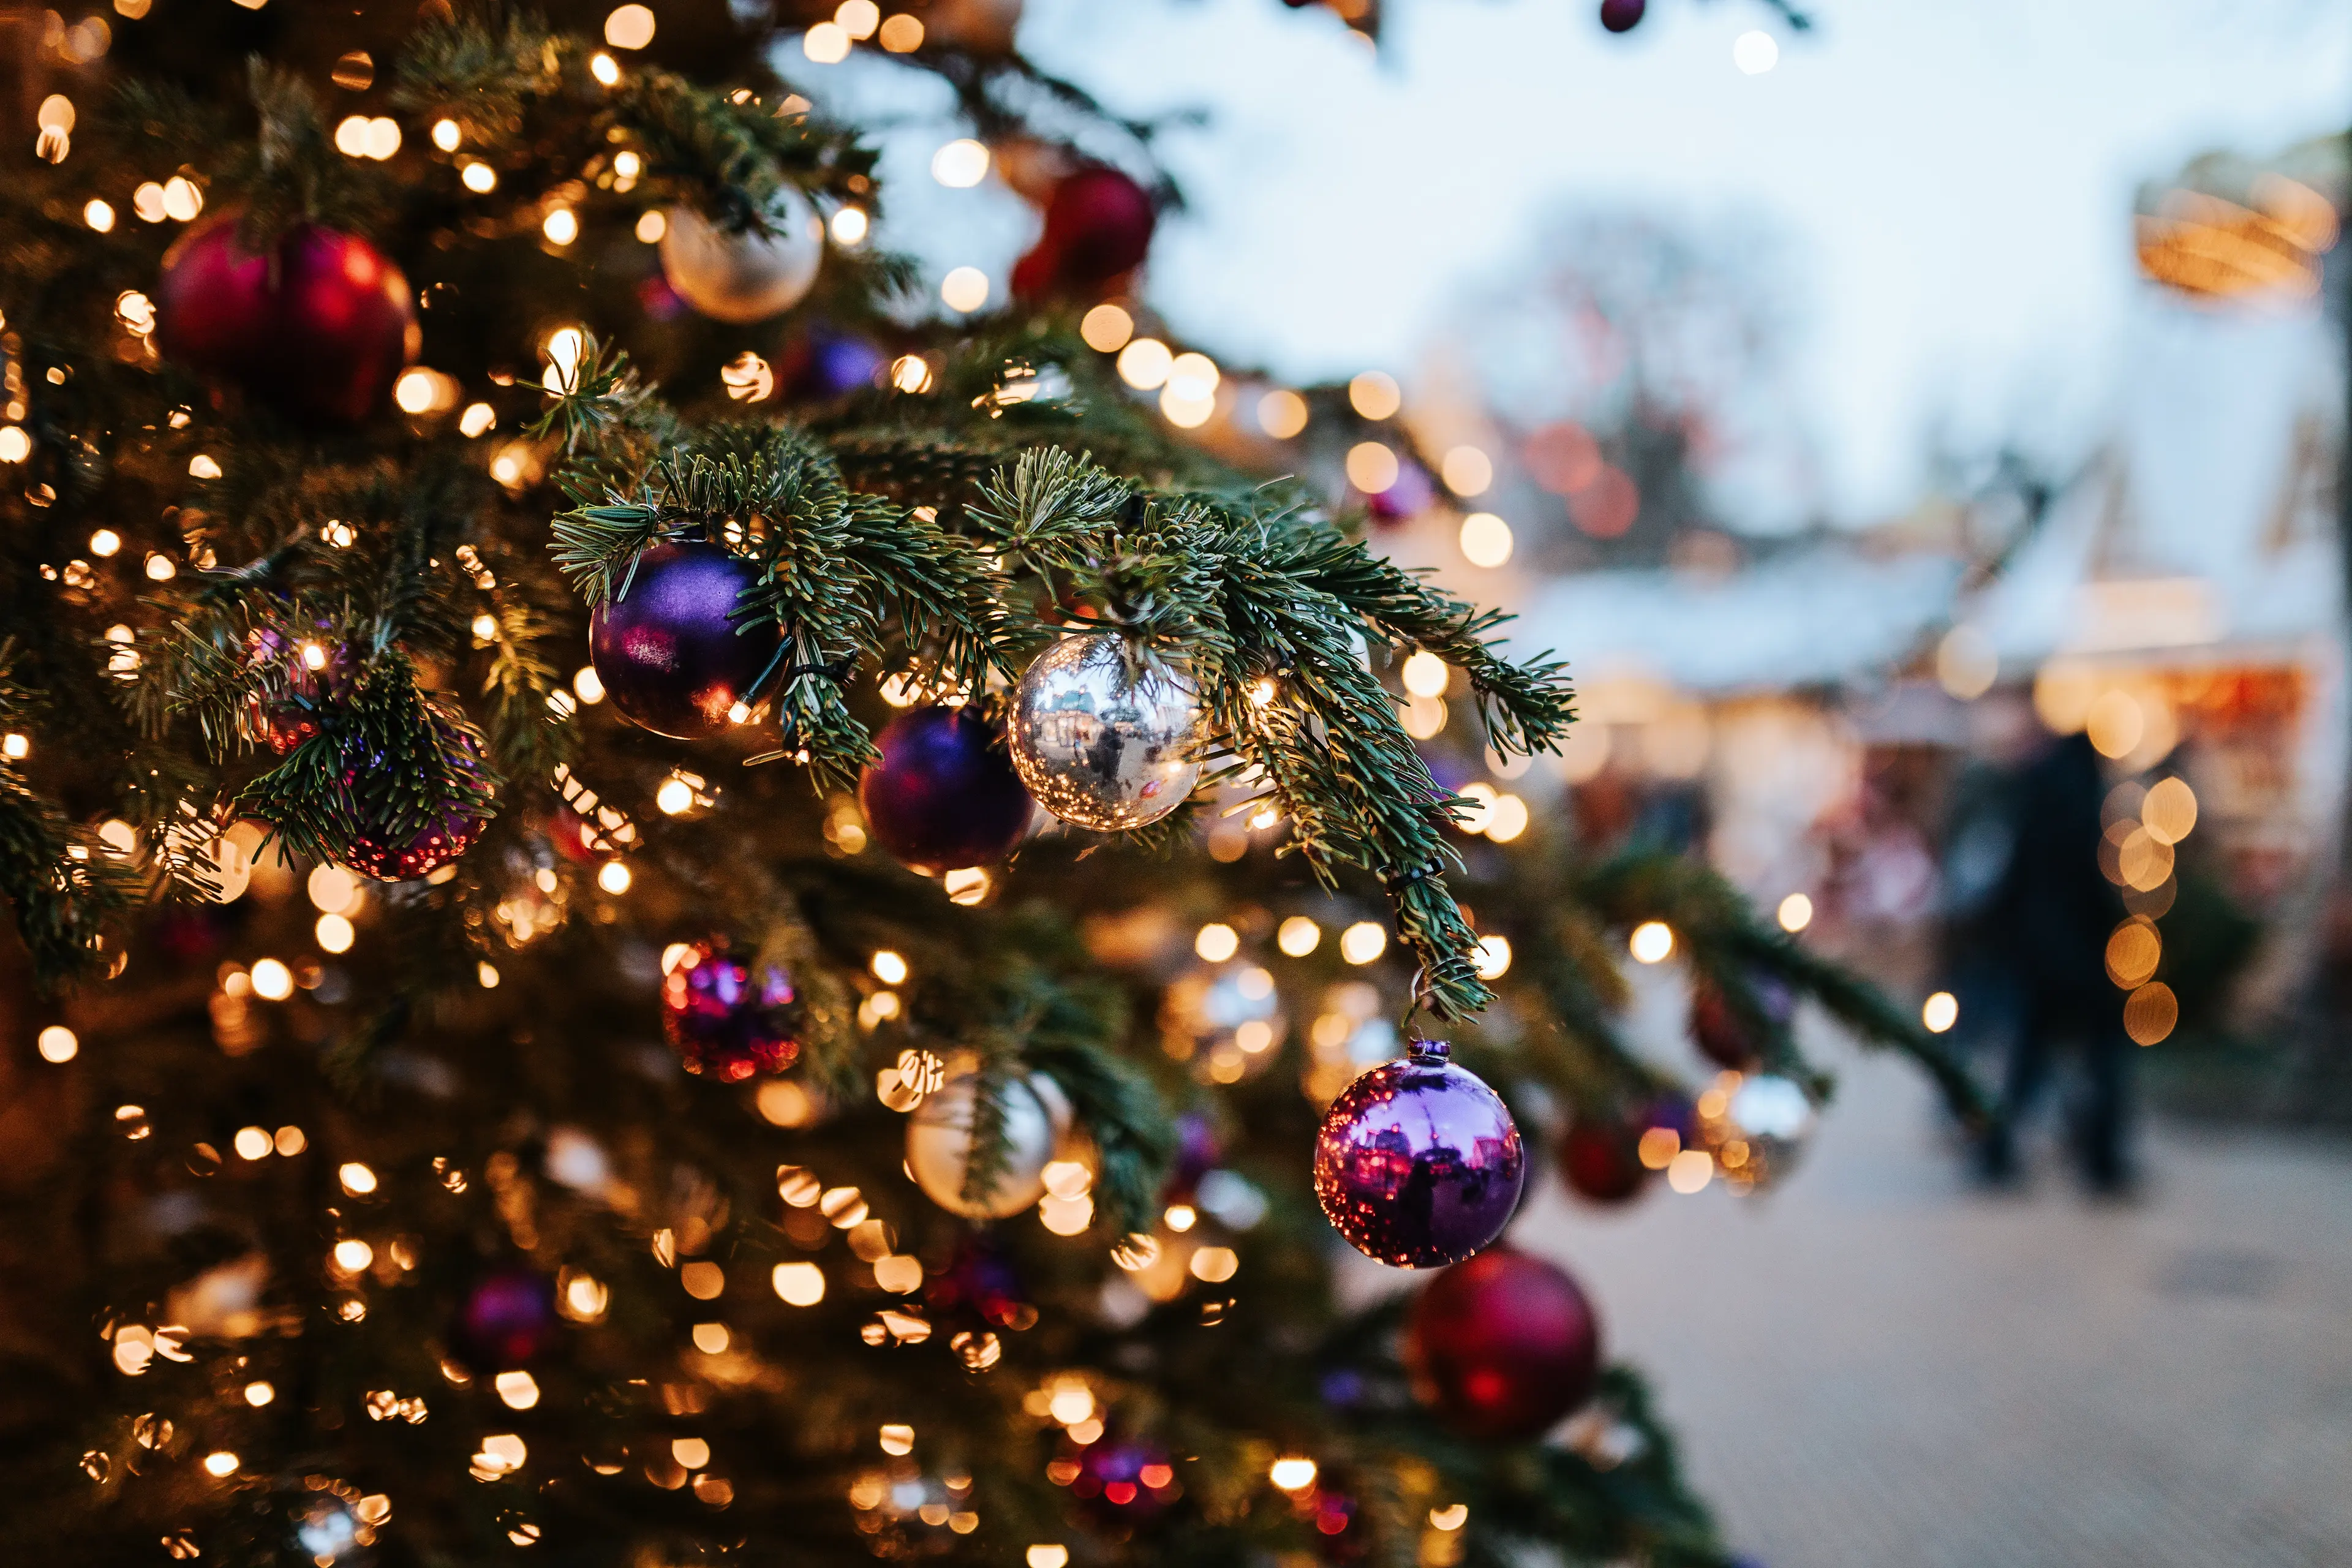 Lights on Christmas tree